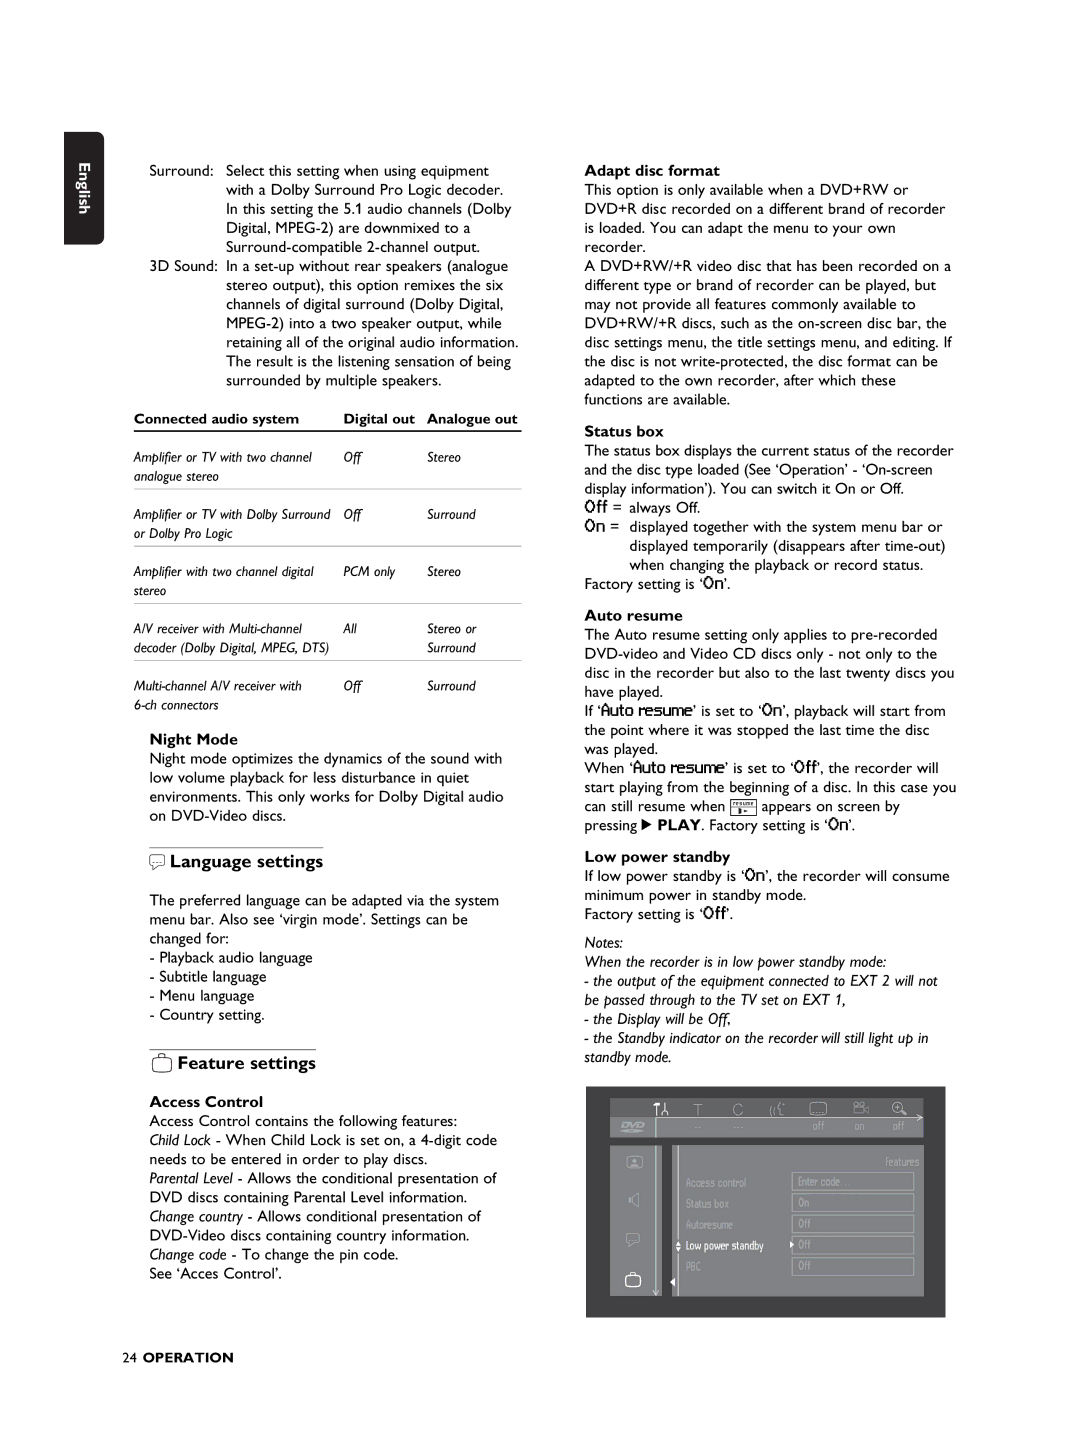 Philips DVDR990 manual Language settings, Feature settings 